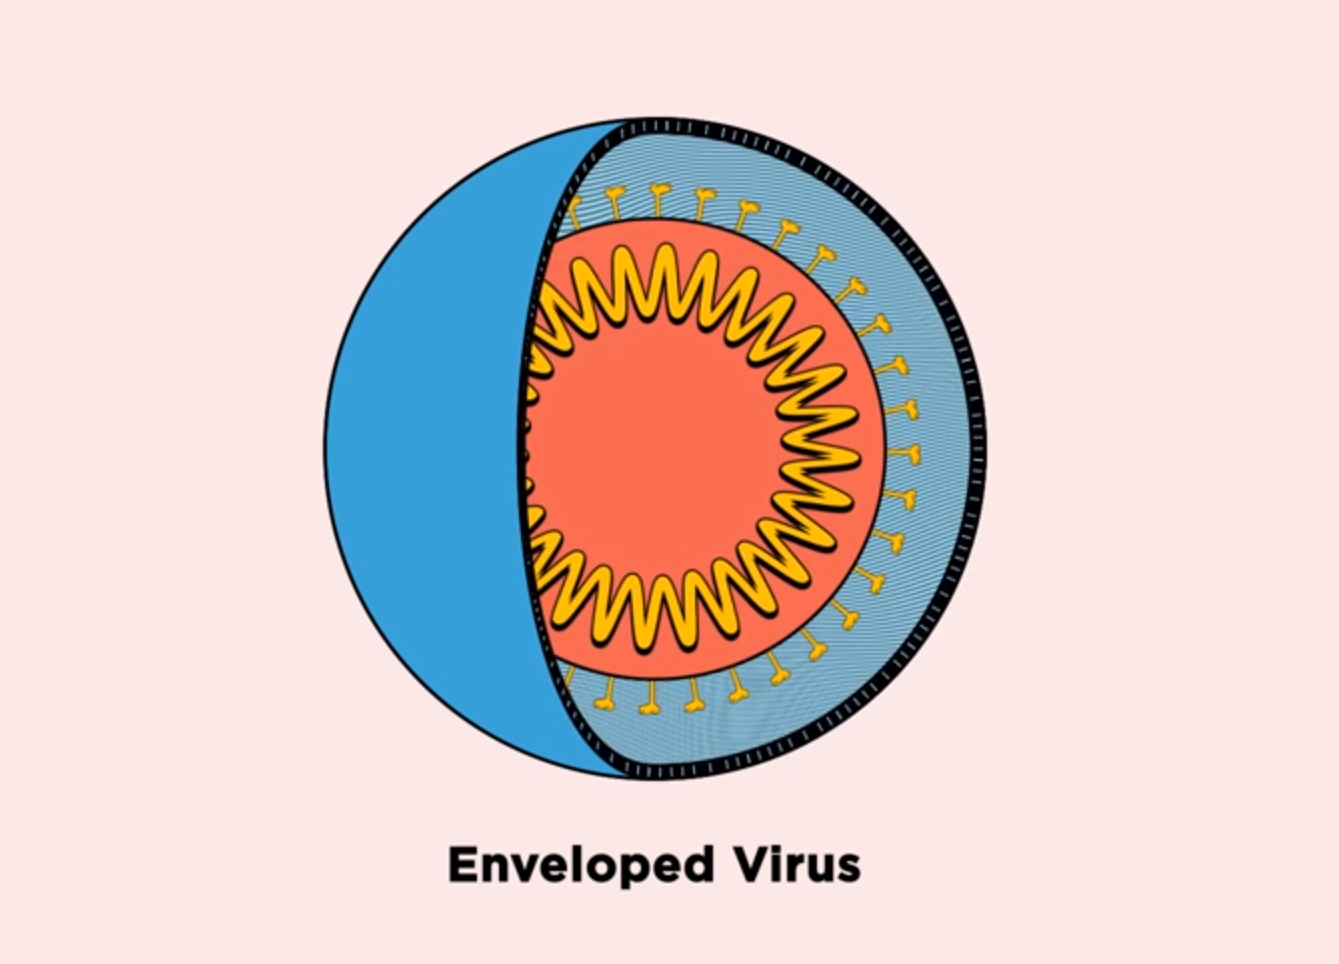 Peptoids inactivate enveloped viruses by disrupting their membranes.